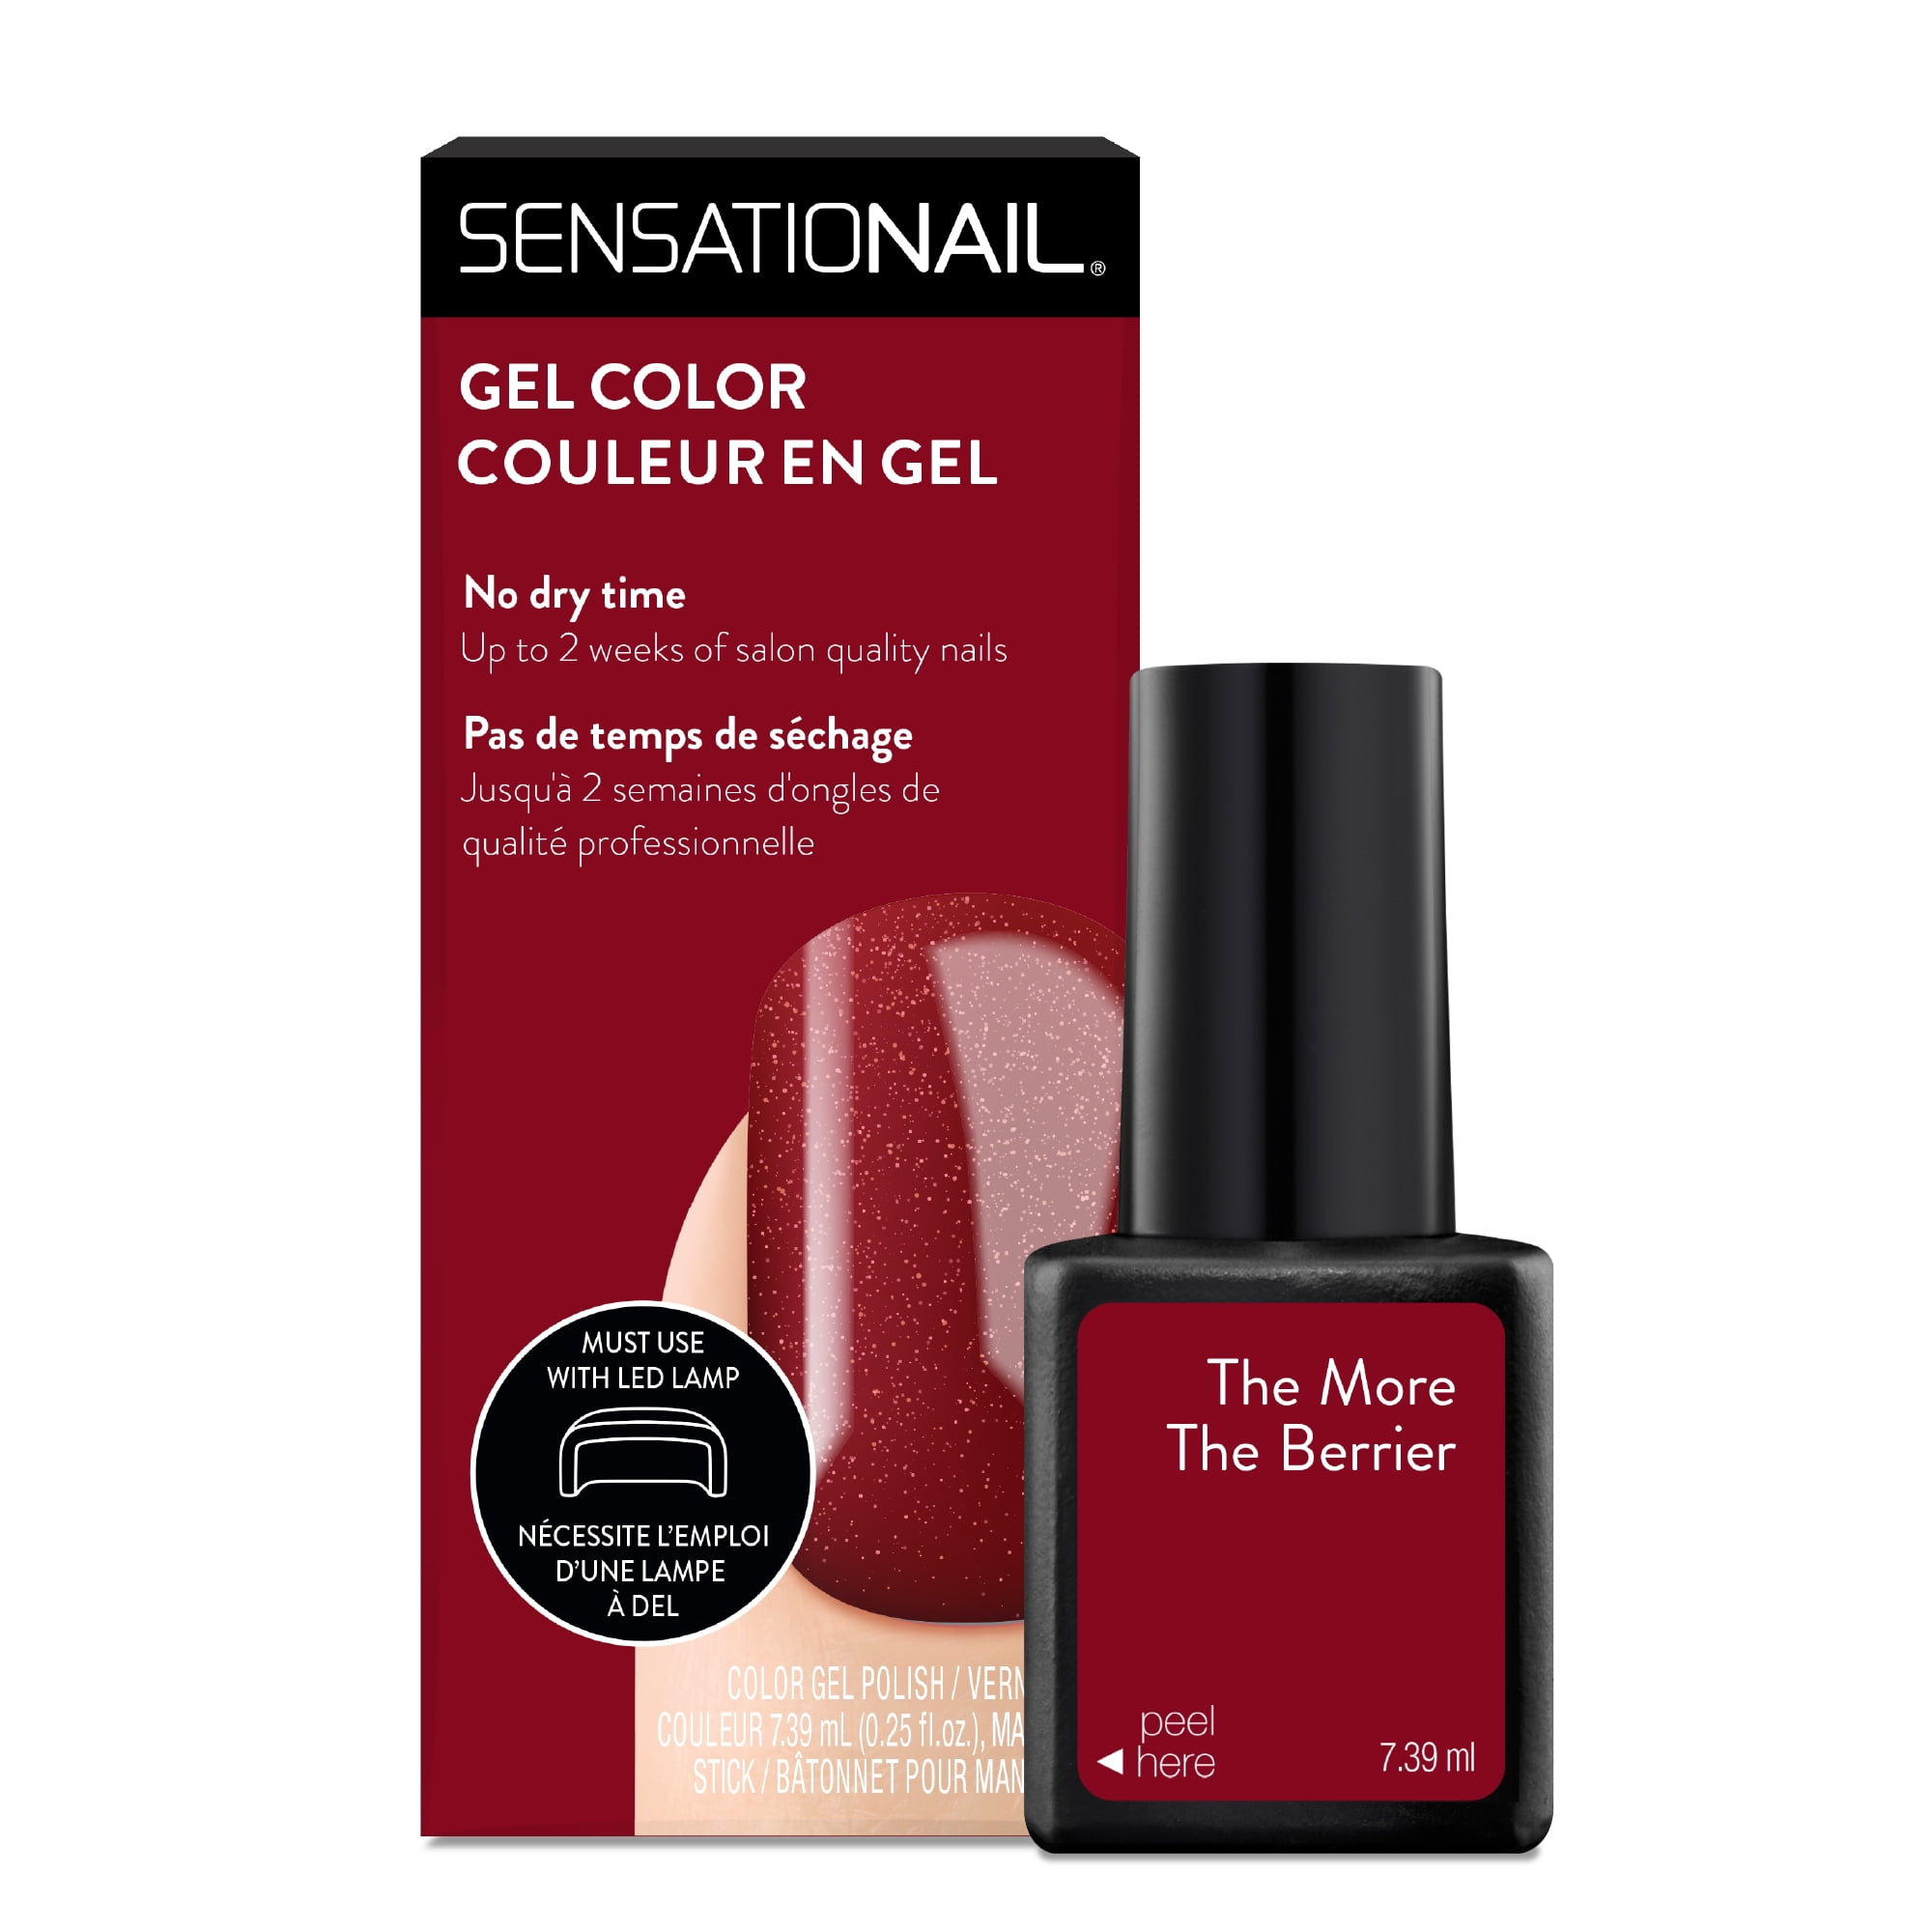 Sensationail Gel Nail Polish (Red), The More Berrier, 0.25 fl oz - Walmart.com